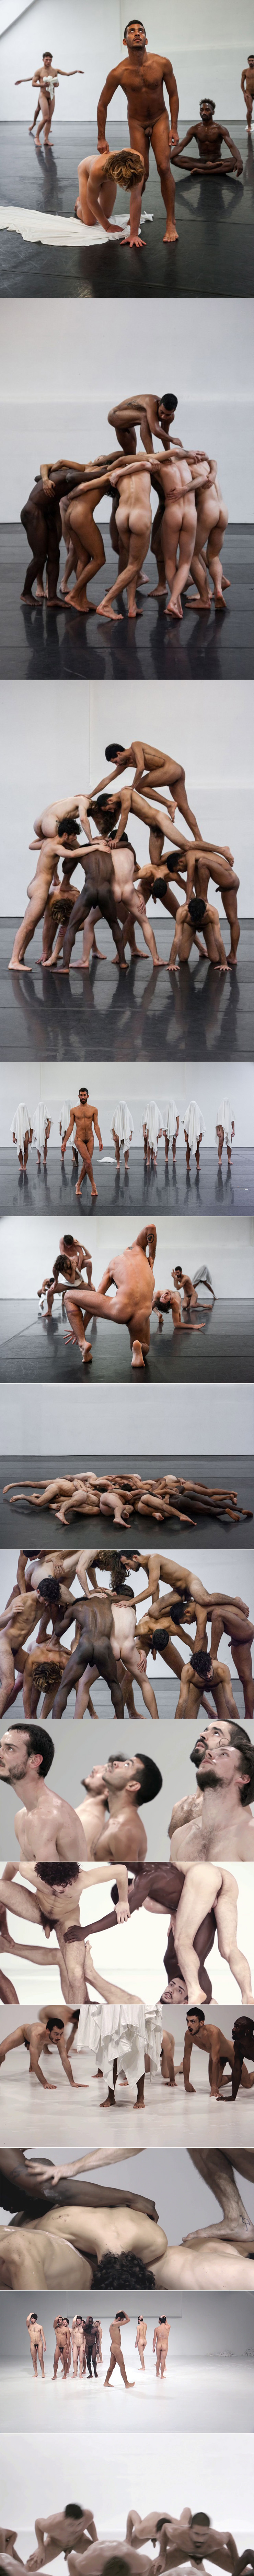 Anima-Ardens-11-Nude-Men-Dancing-Uncut-Cocks-Small-Average-Big-Interracial-Softcore-Male-Feet-Hairy-Men